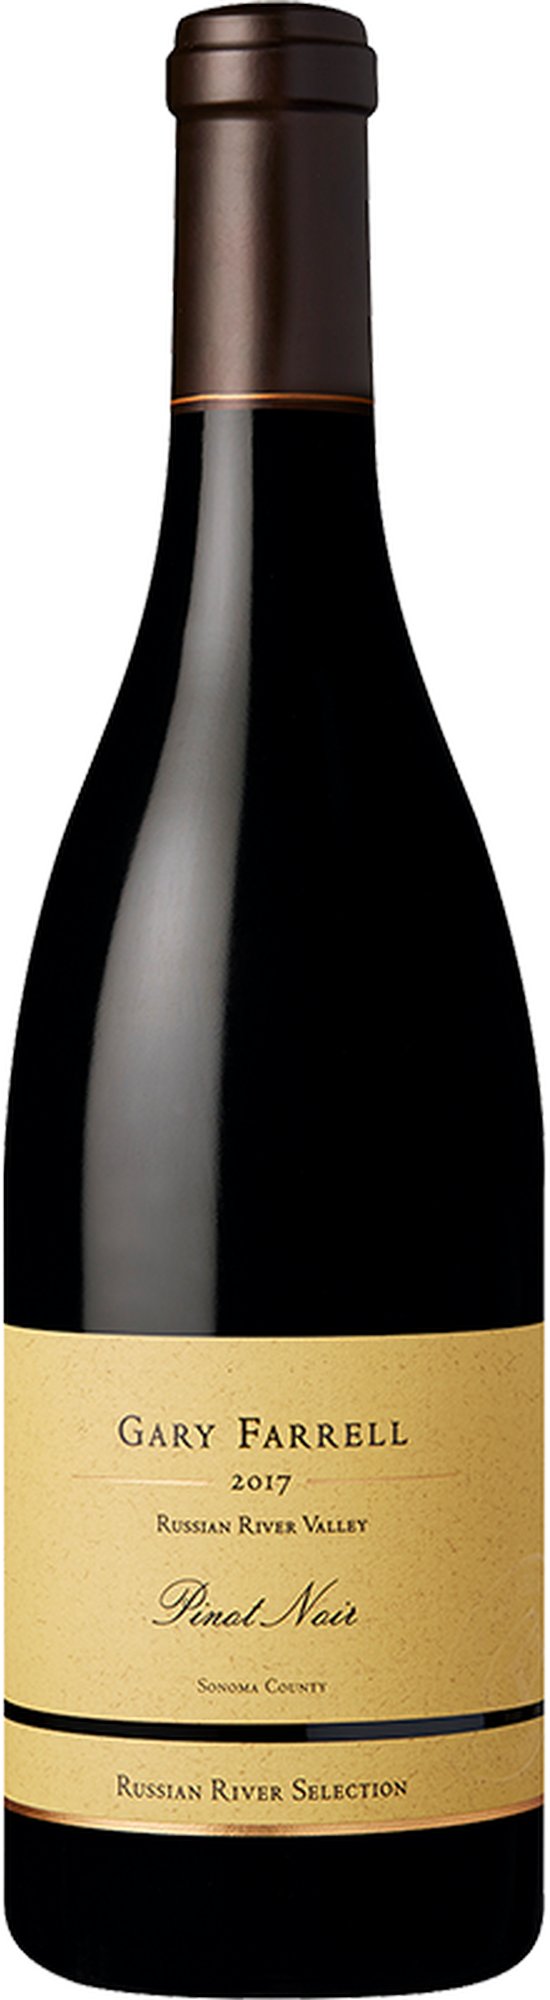 2012 Russian River Selection Pinot Noir